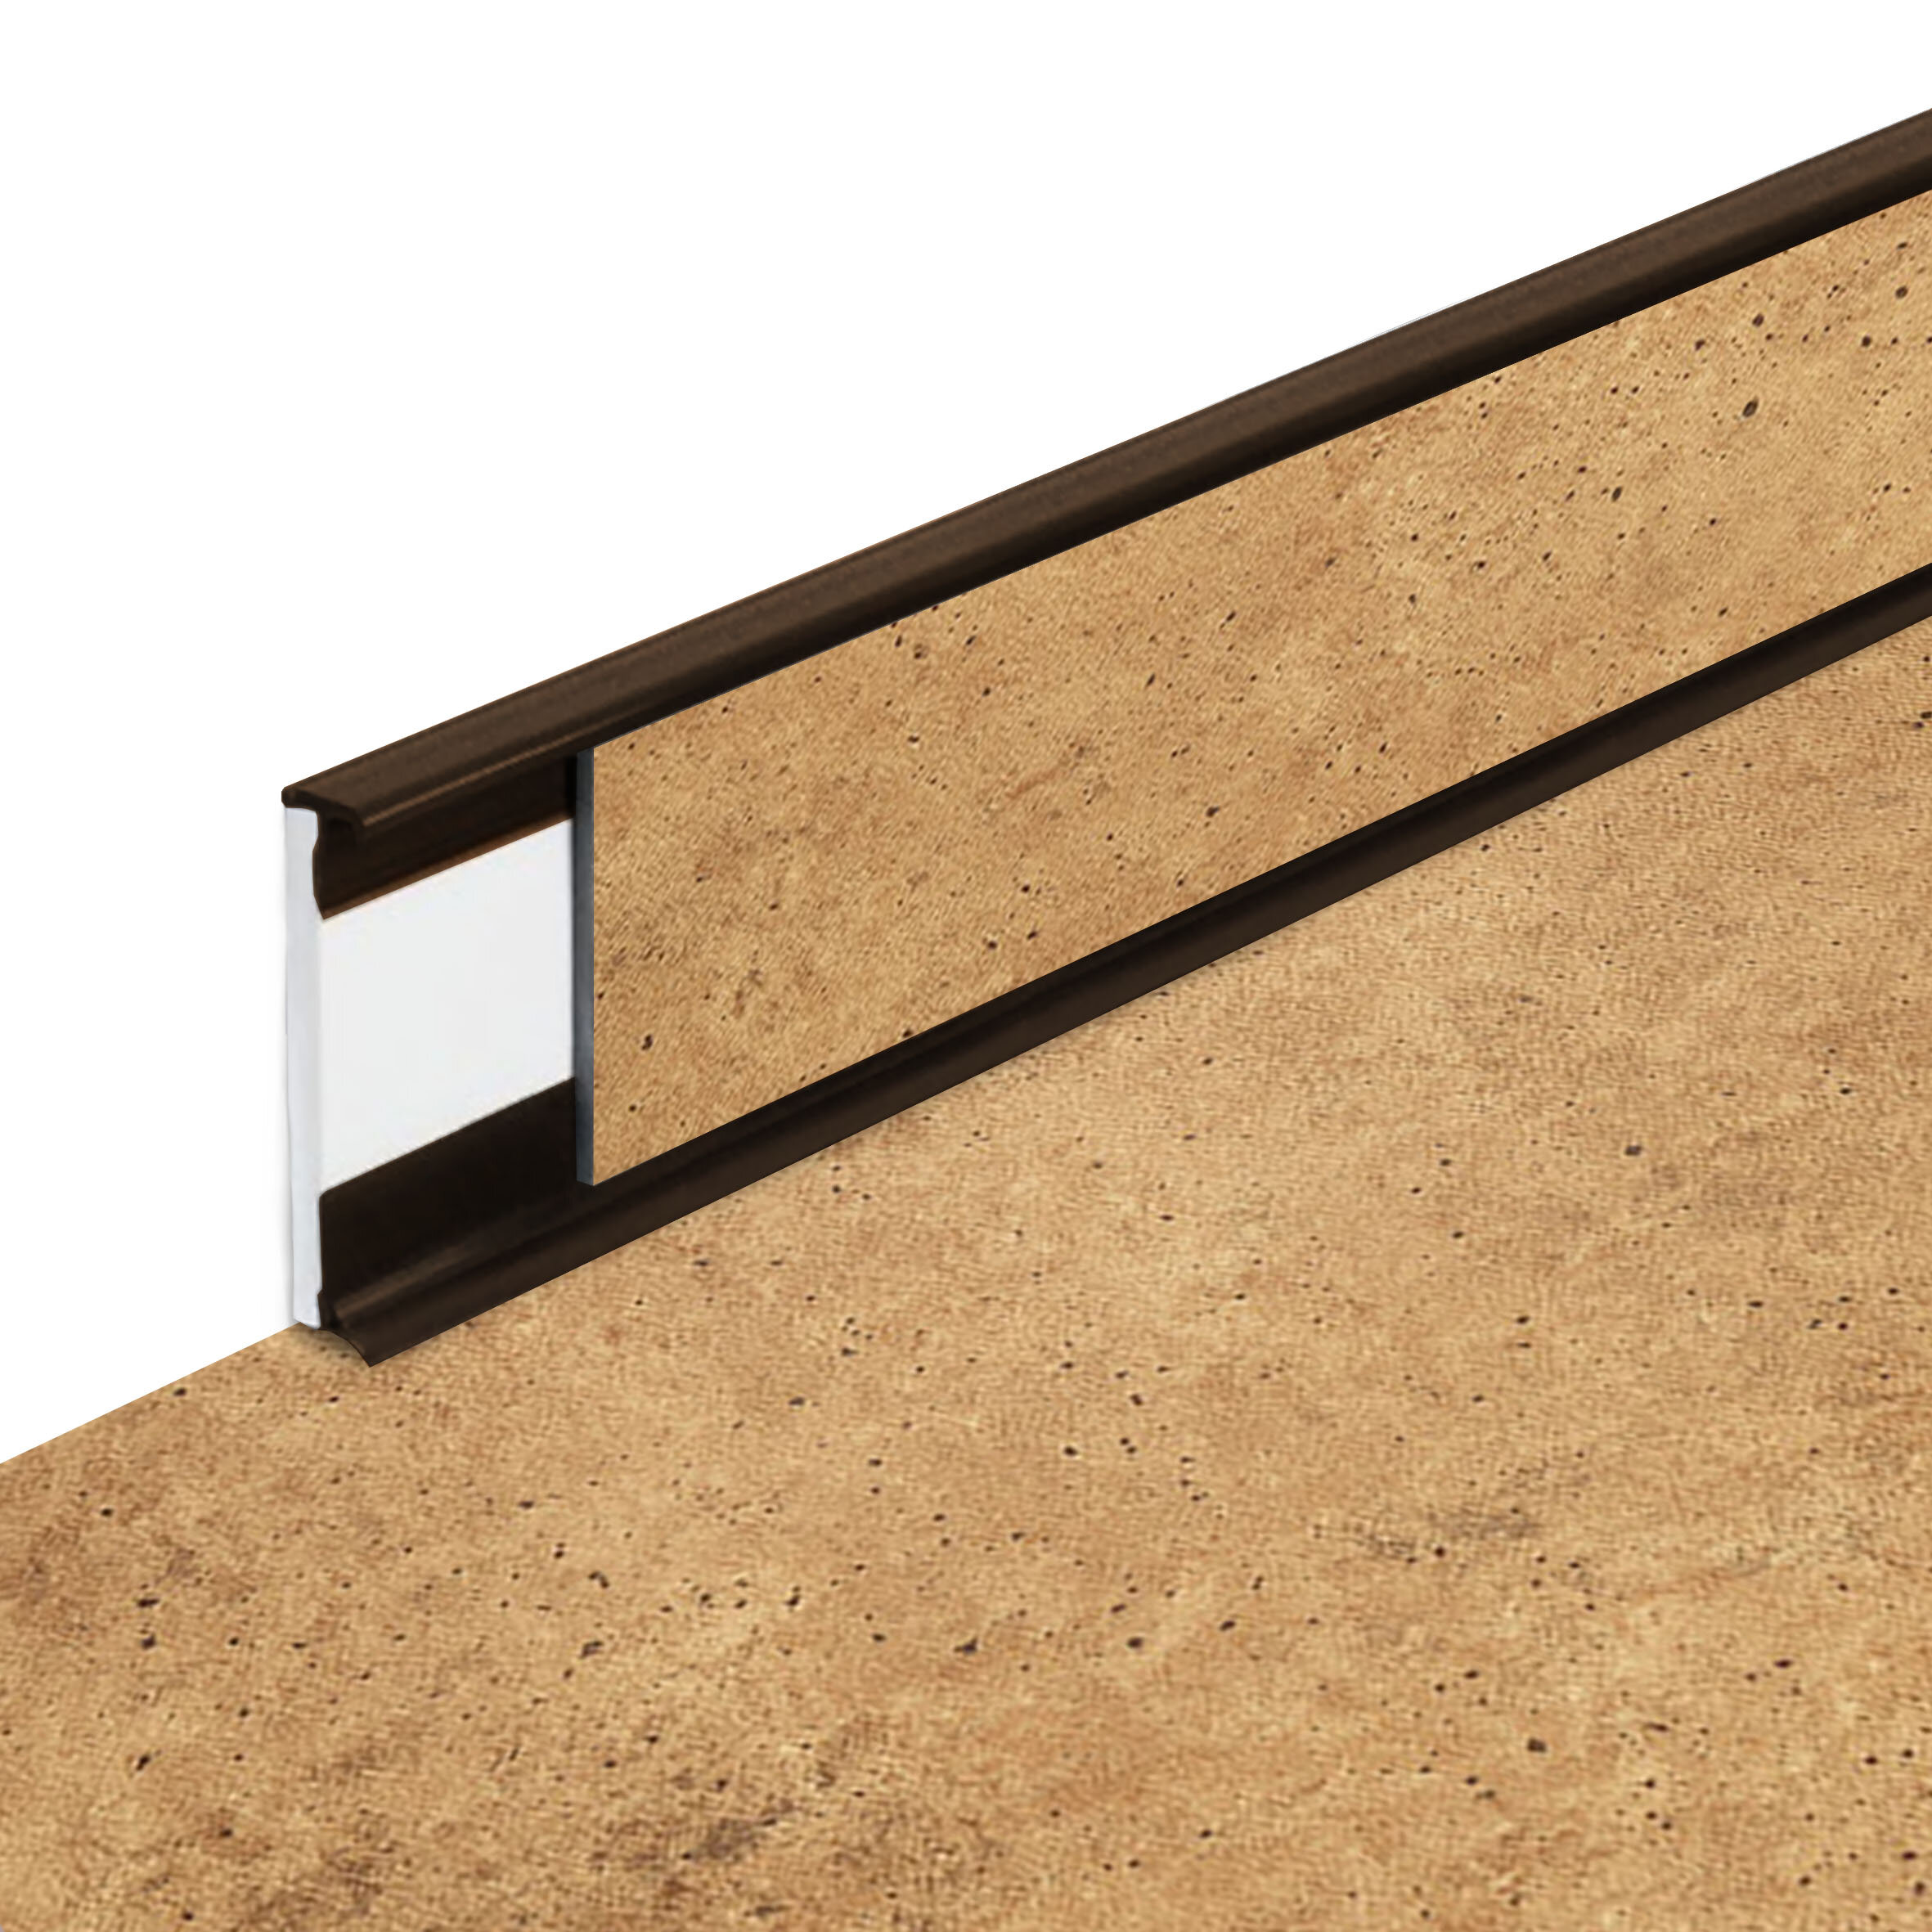 PVC vinylová soklová podlahová lišta Fortelock Business Tornes Mars C006 Brown - dĺžka 200 cm, výška 5,8 cm, hrúbka 1,2 cm